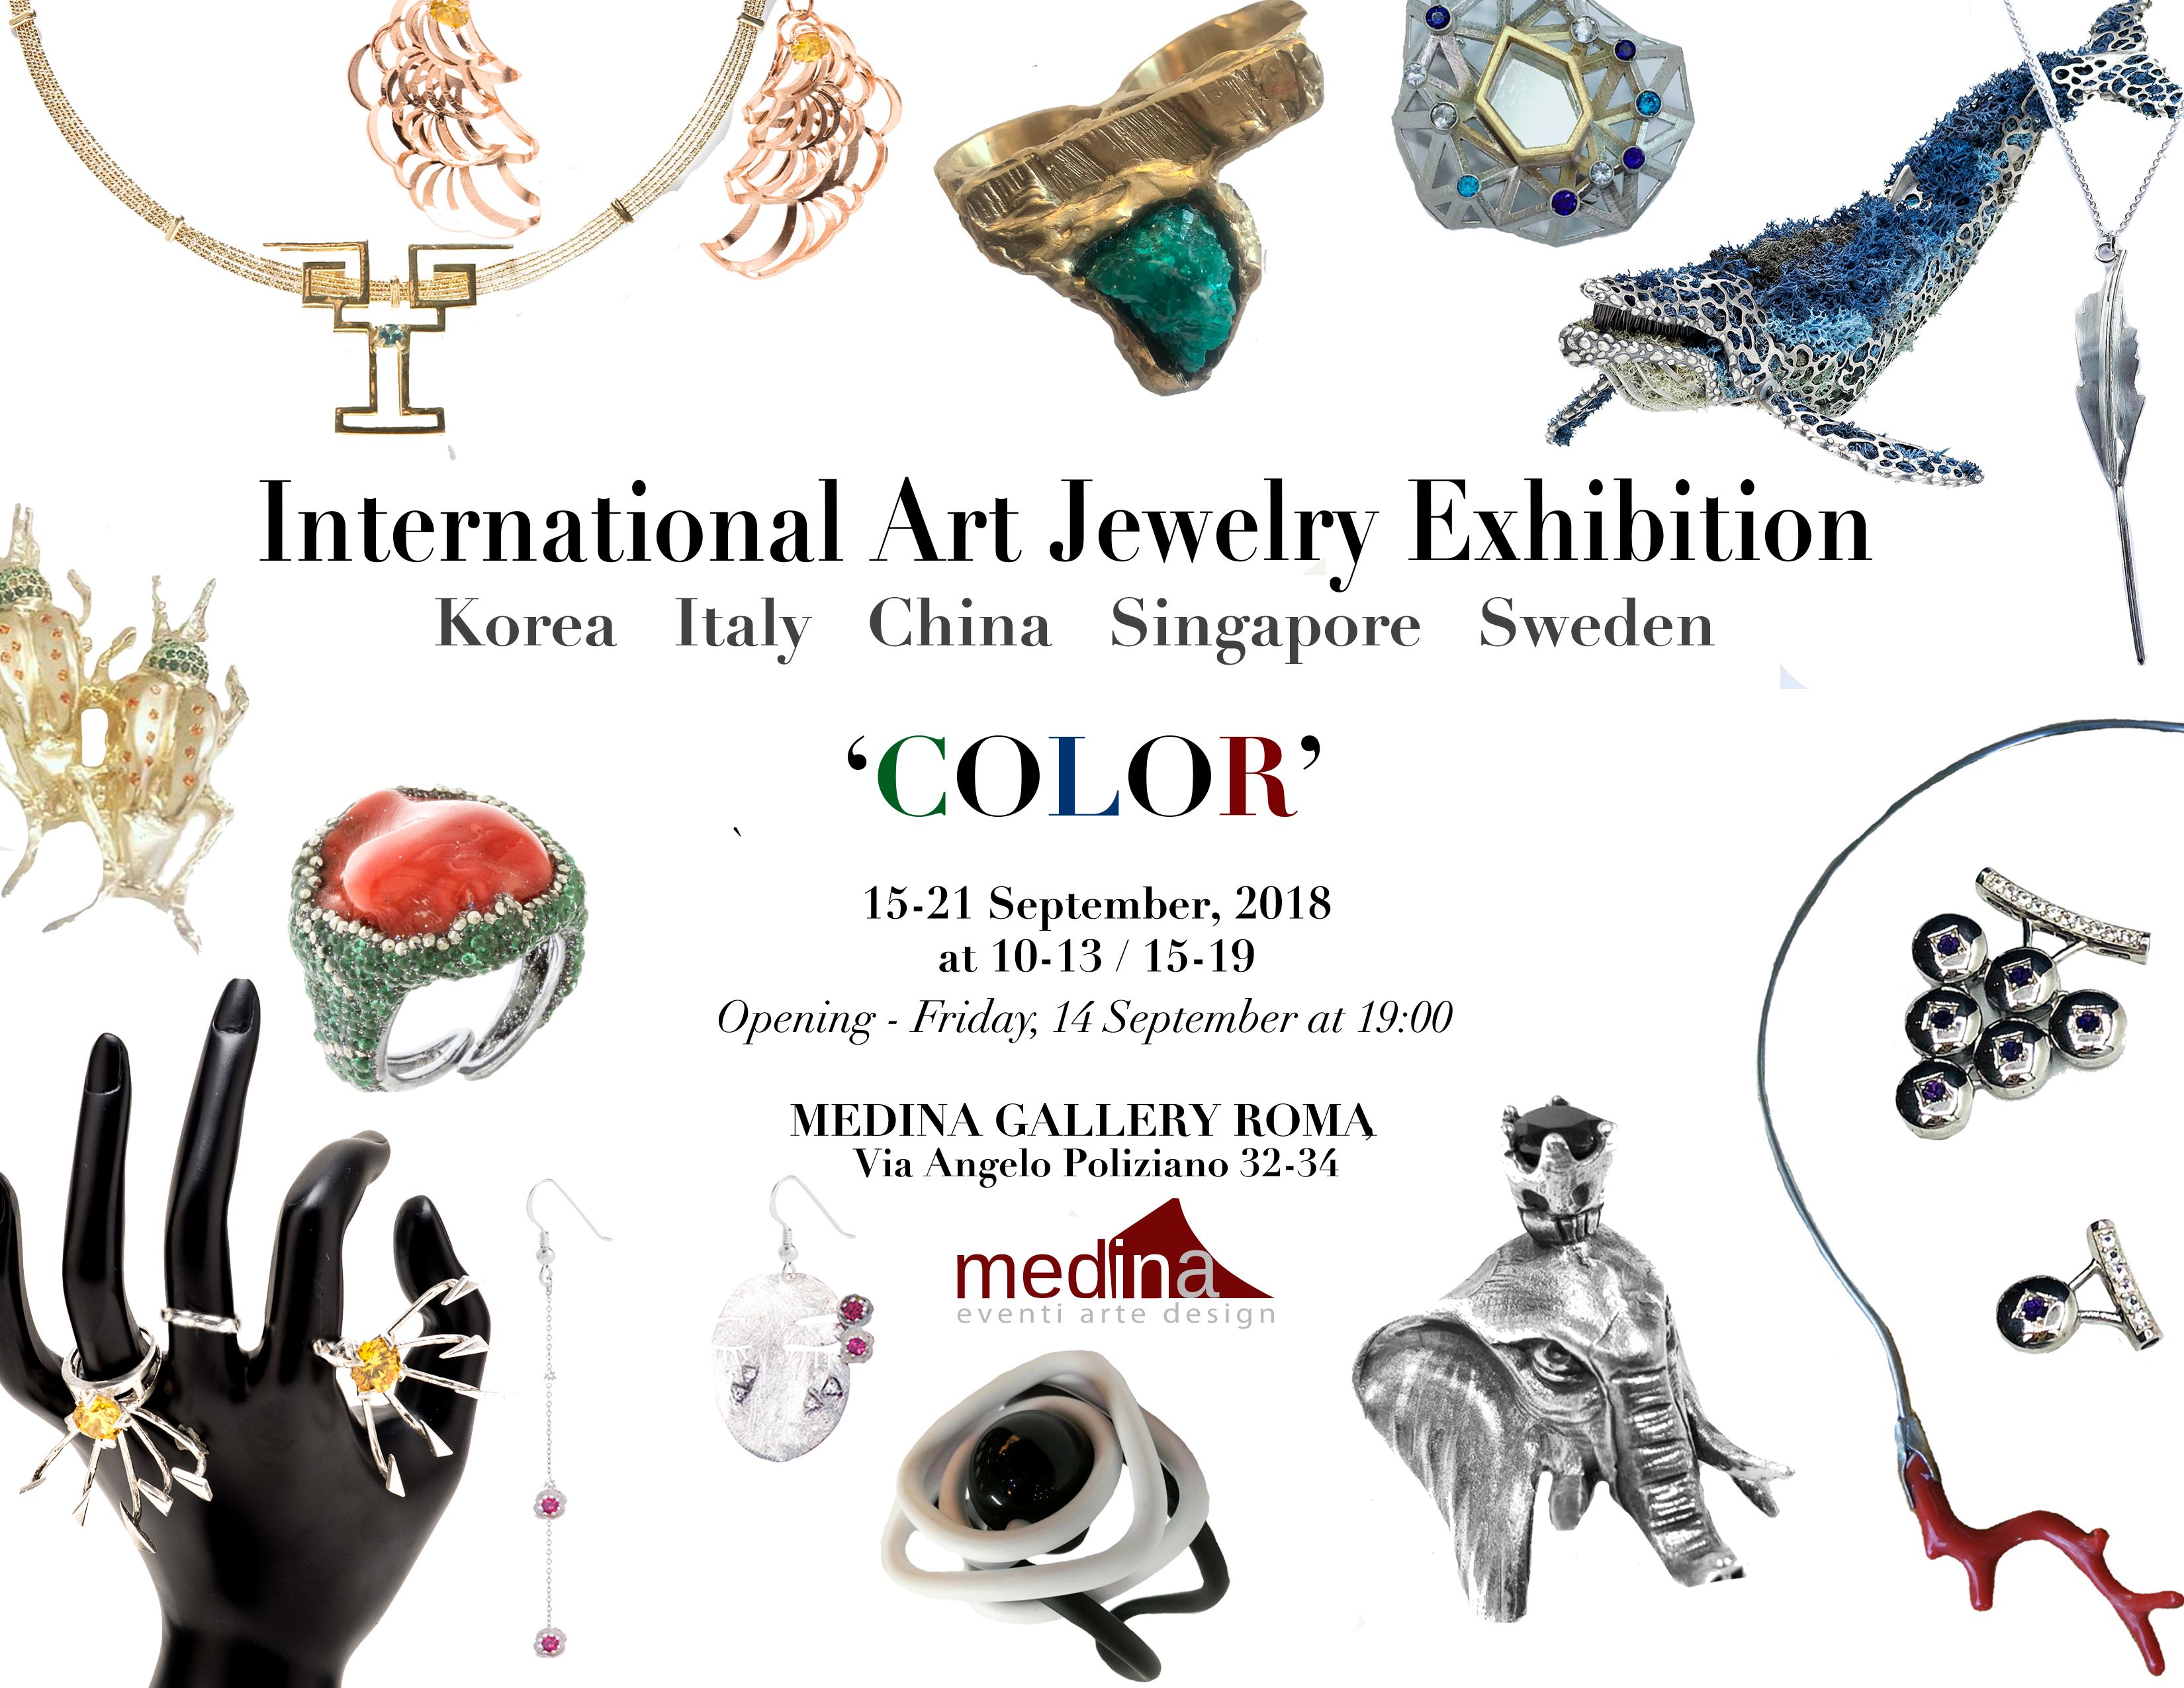 International Art Jewelry Exhibition - IAJE in "Color"